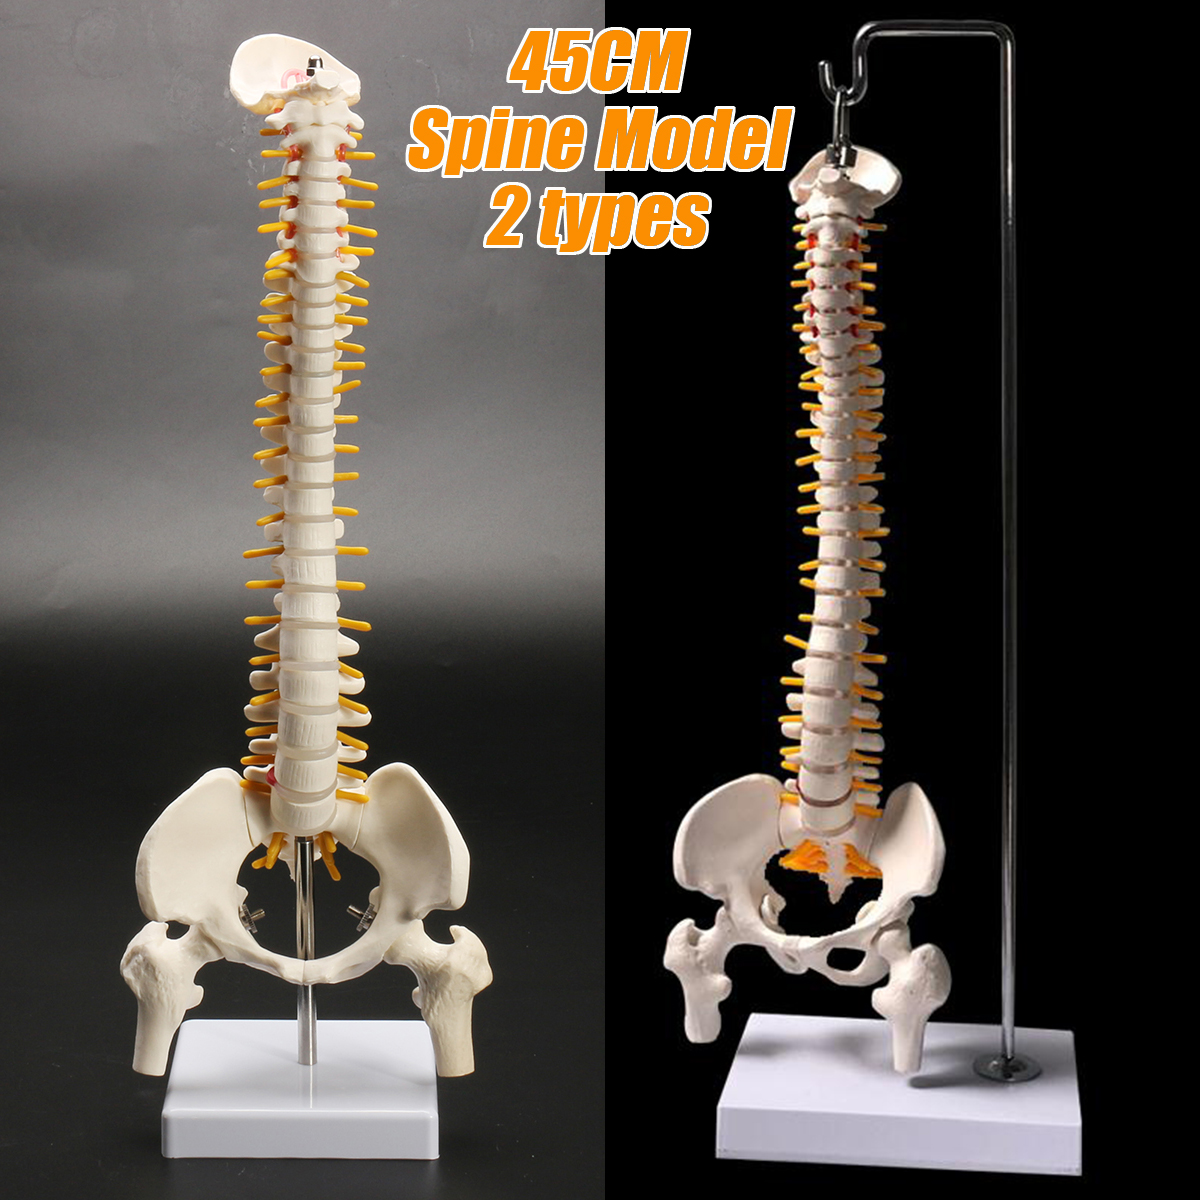 45cm-177quot-Spine-Medical-Model-With-Pelvis-Femur-Heads-12-Life-Lab-Equipment-1620821-1